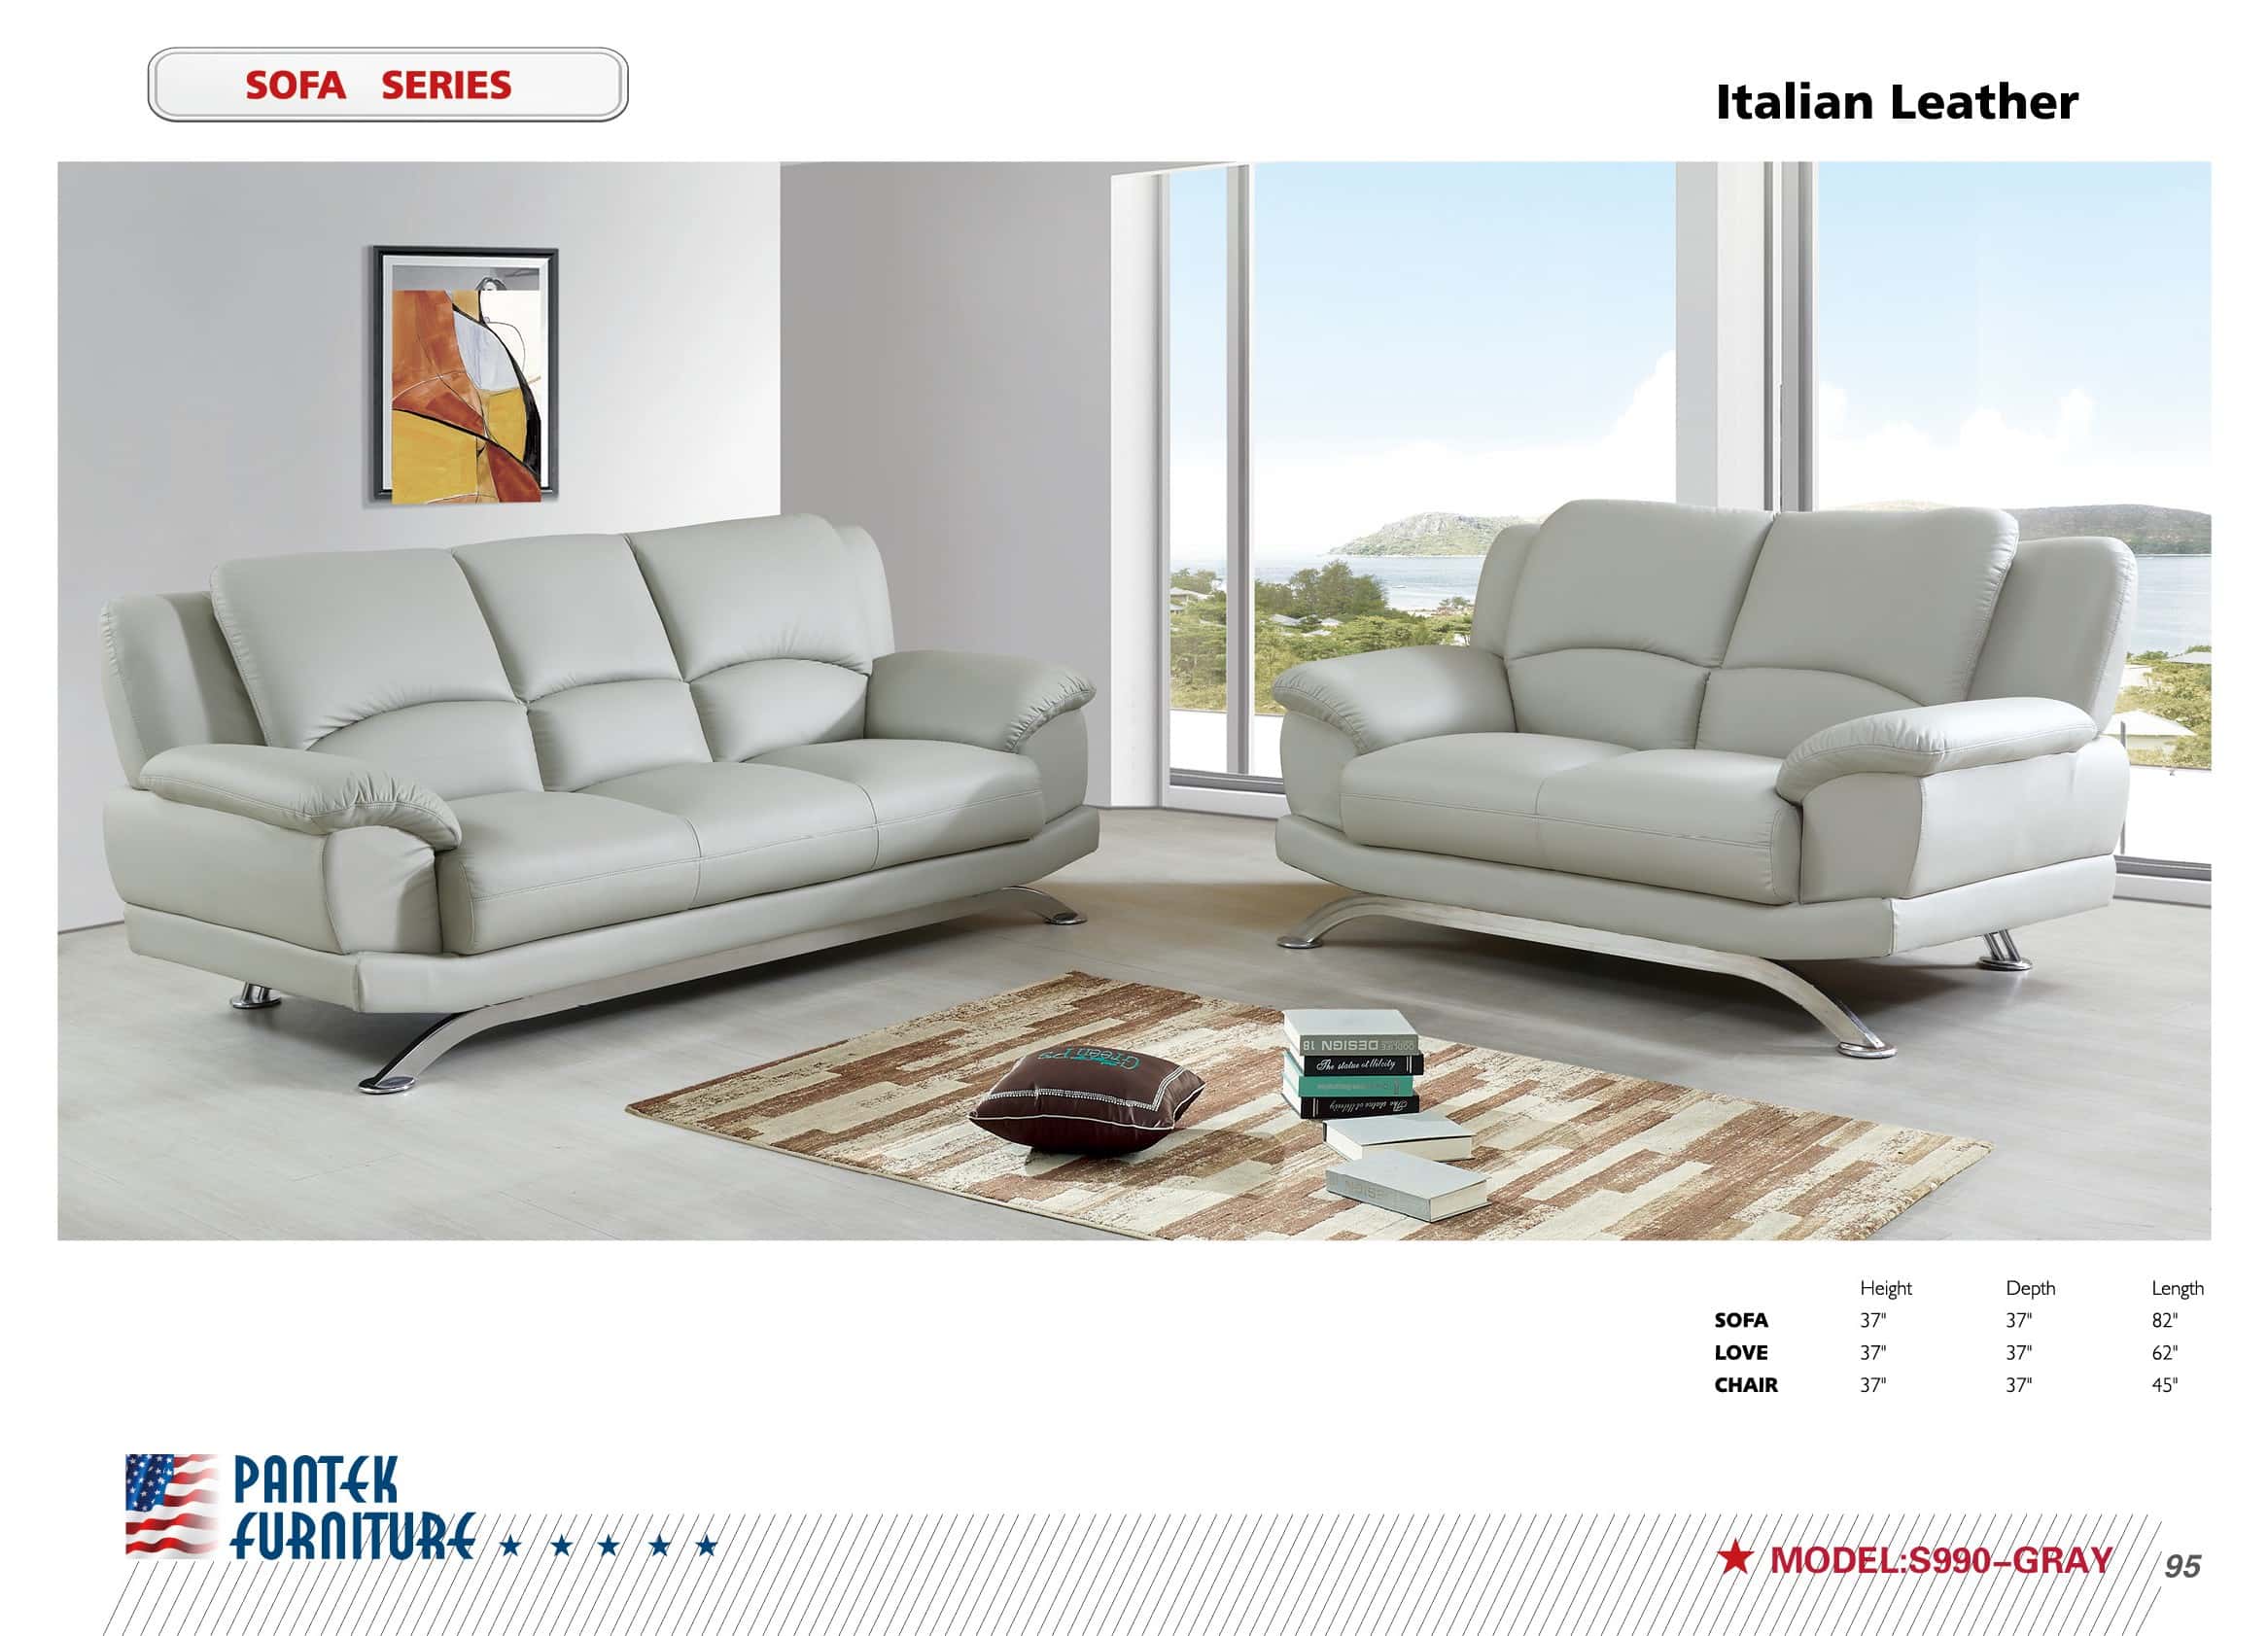 SF 990 Italian Gray Leather Sofa, Loveseat & Chair Set by Pantek Furniture